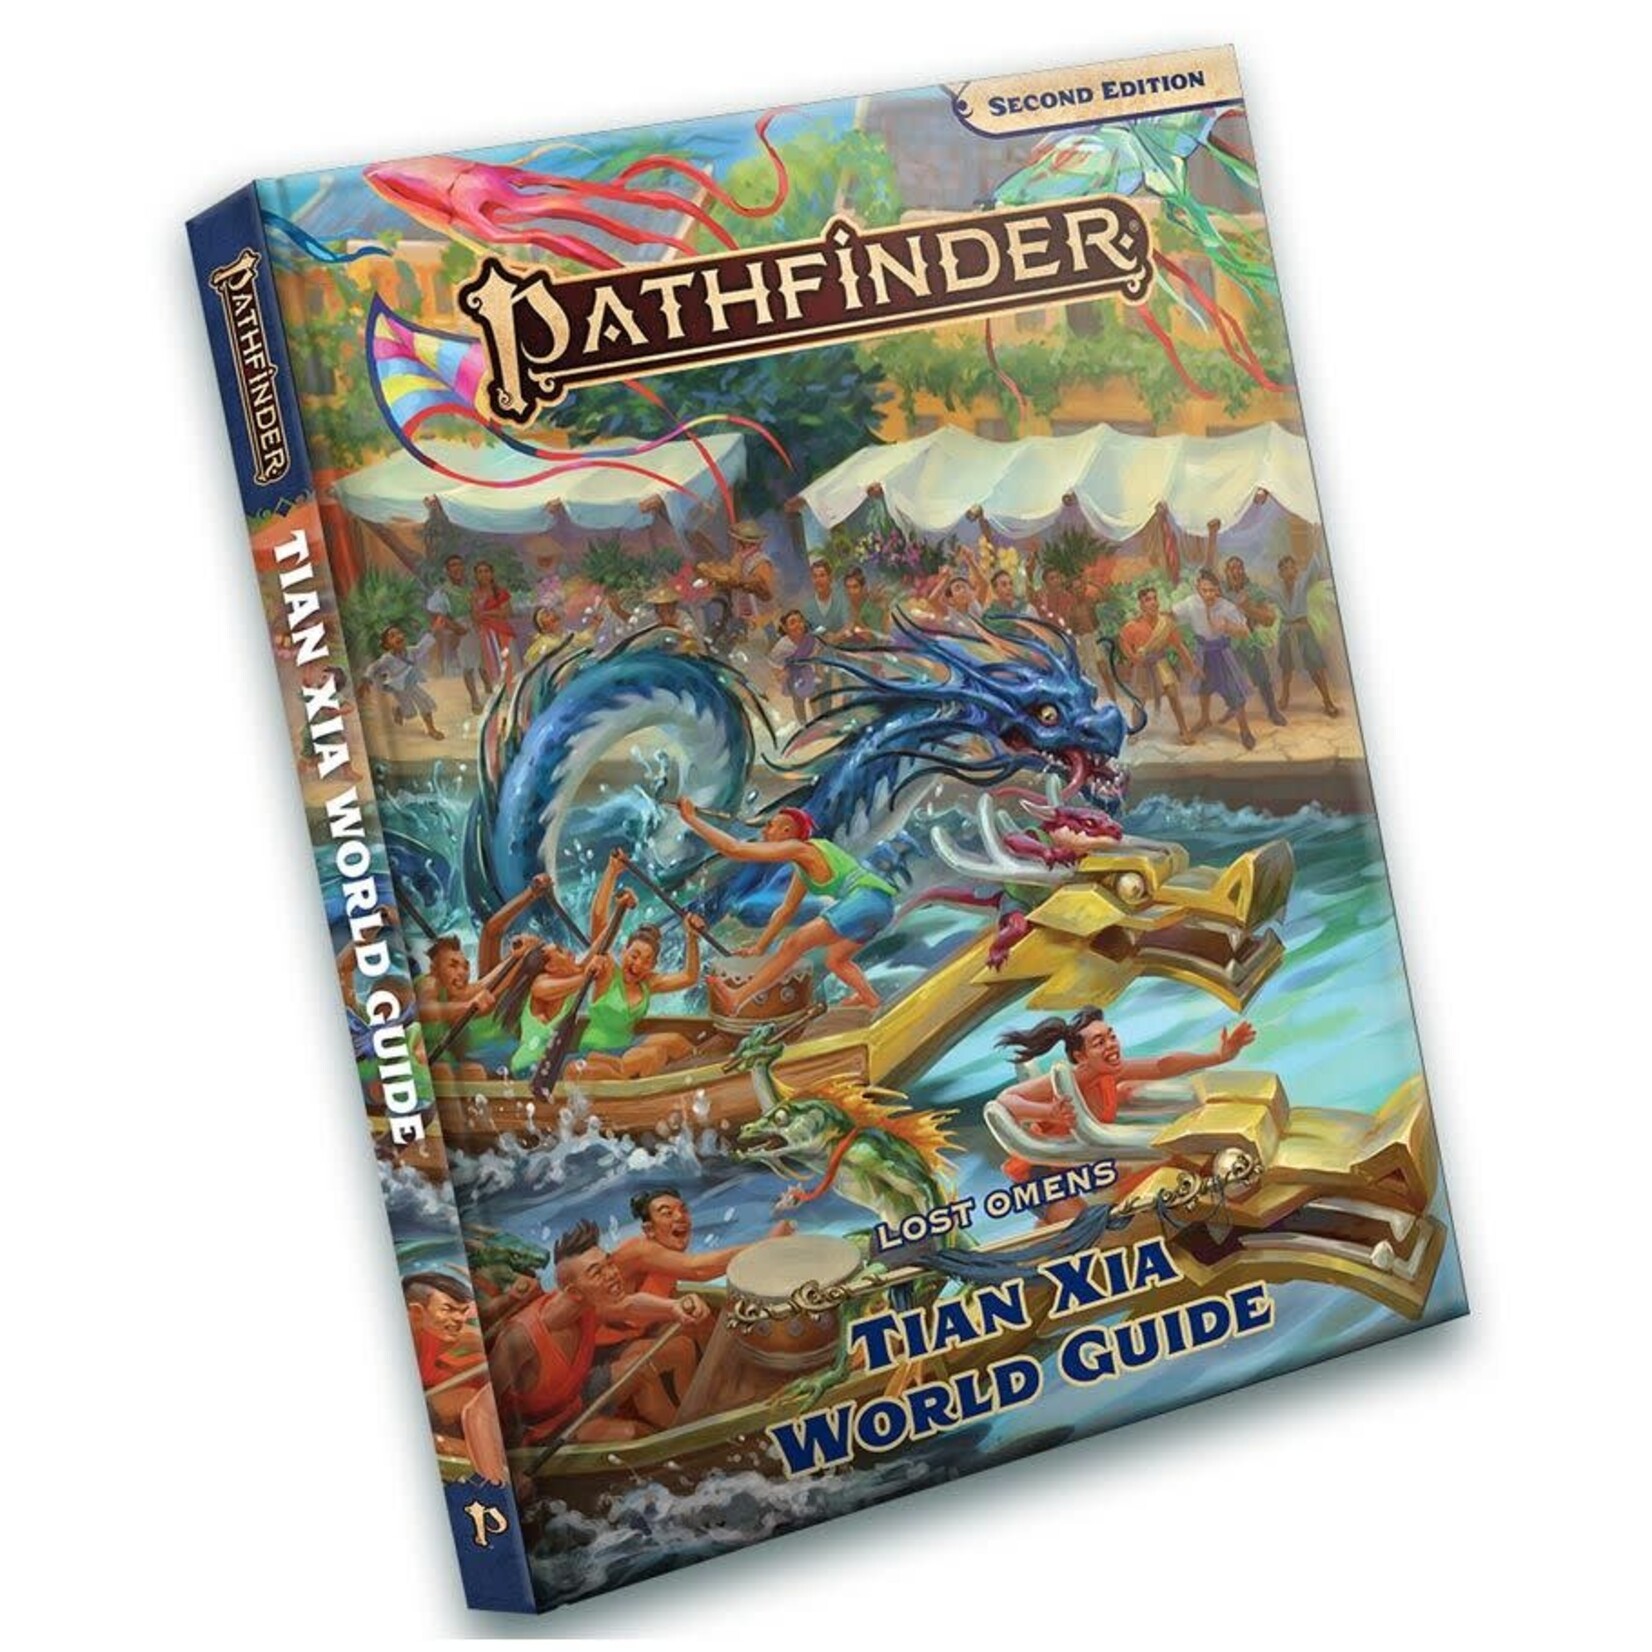 Pathfinder 2E: Lost Omens: Tian Xia World Guide